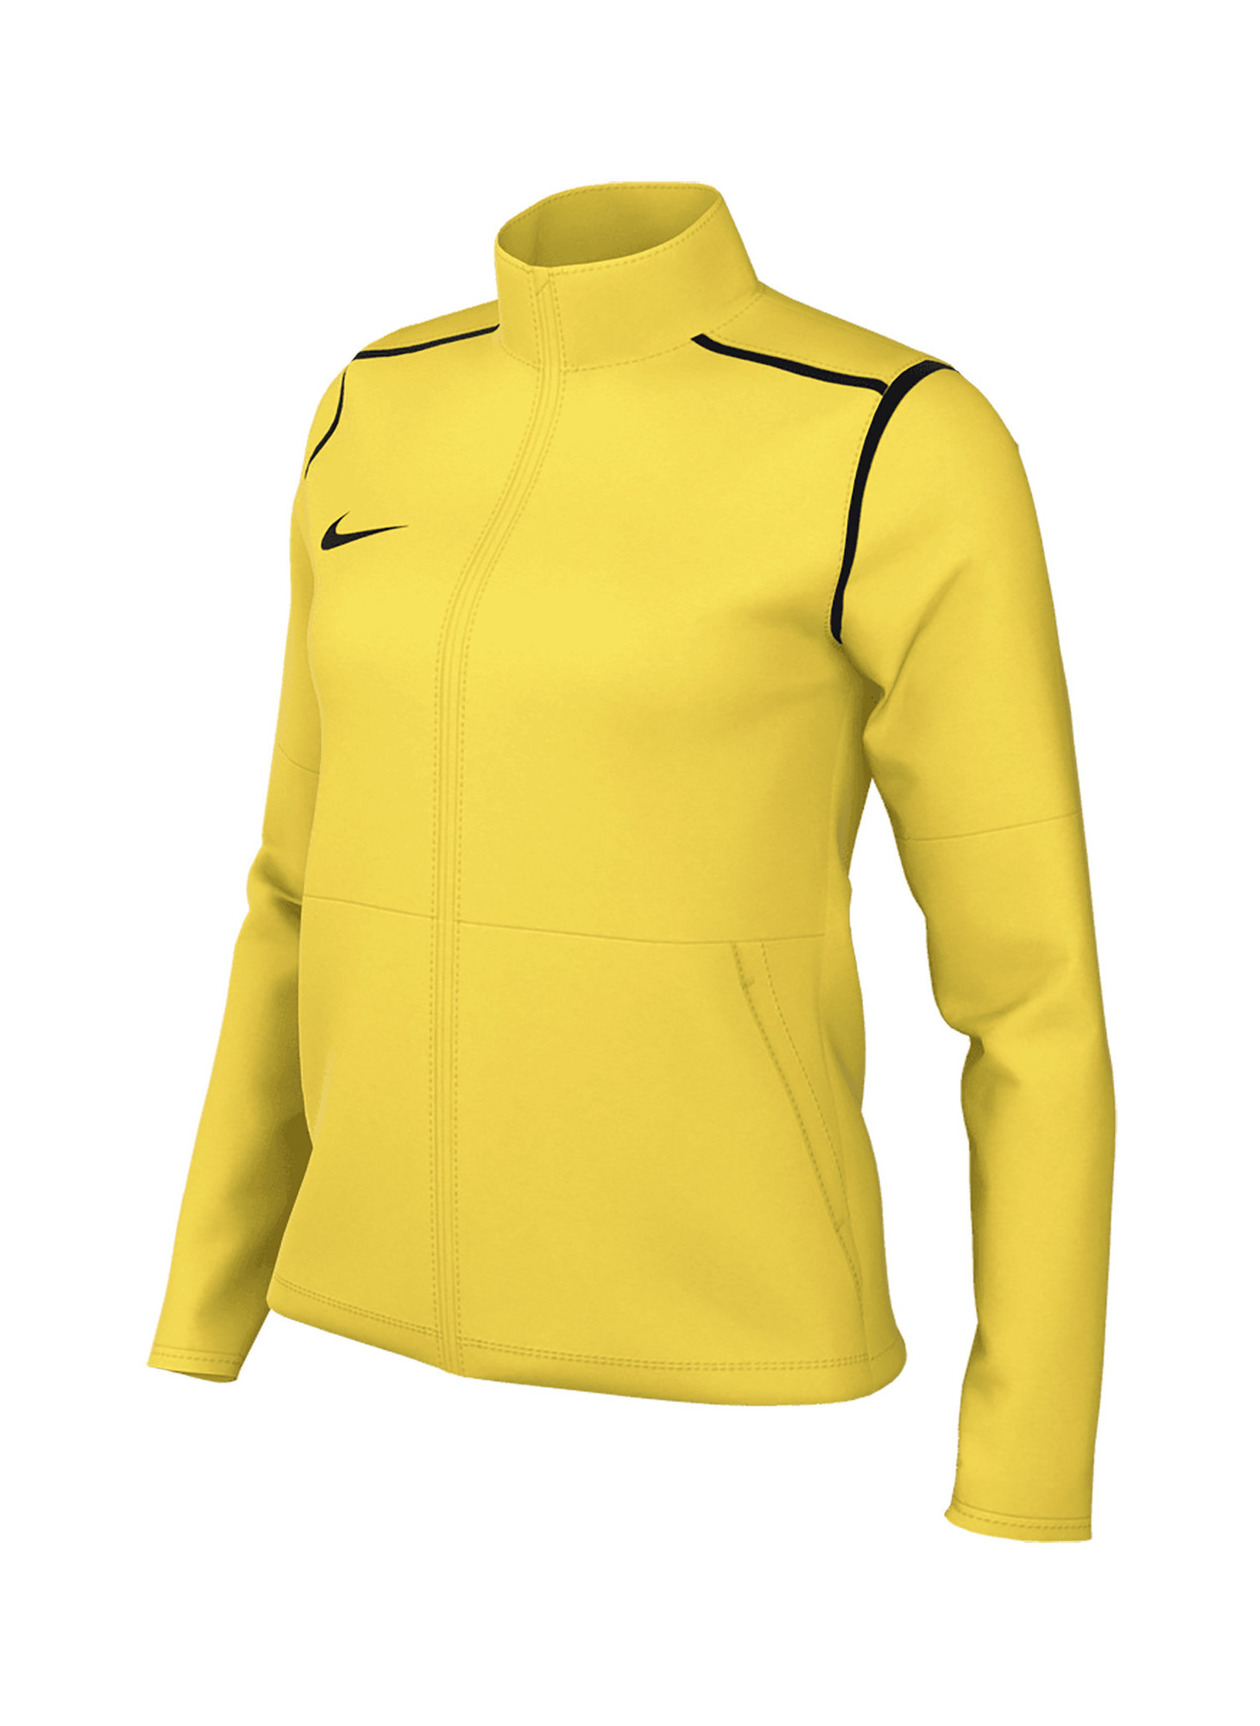 Nike Women's Tour Yellow / Black / Black Park20 Jacket